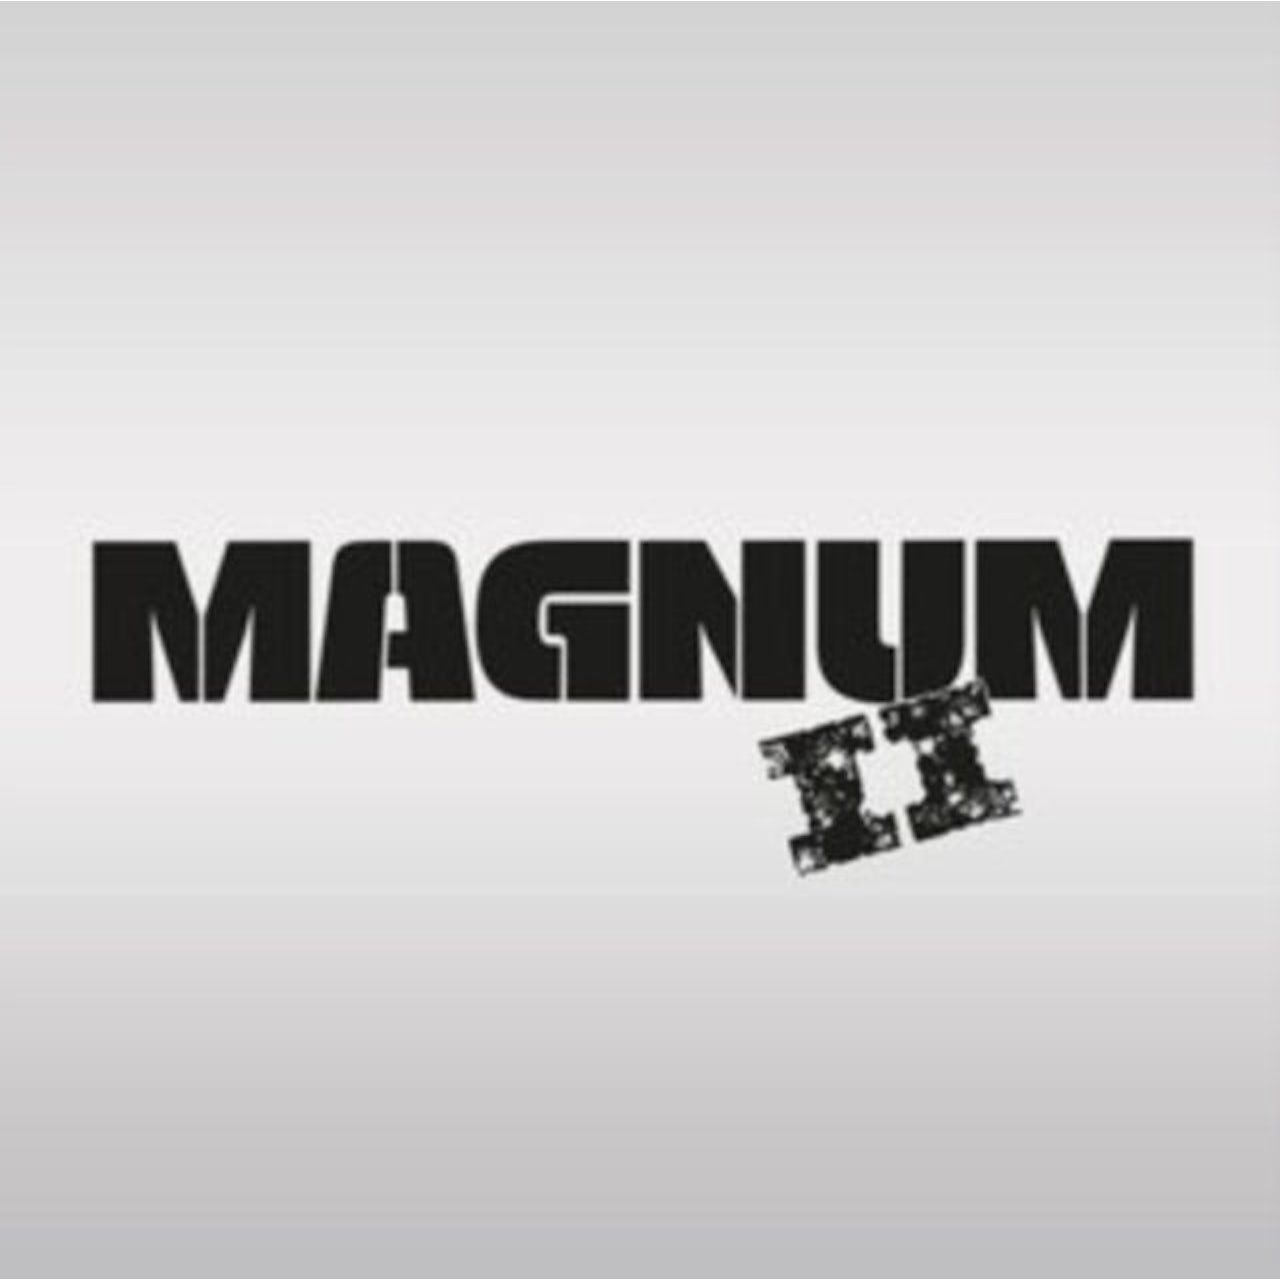 8719262020252, Виниловая пластинка Magnum, Magnum II magnum magnum ii [limited 180 gram silver colored vinyl]